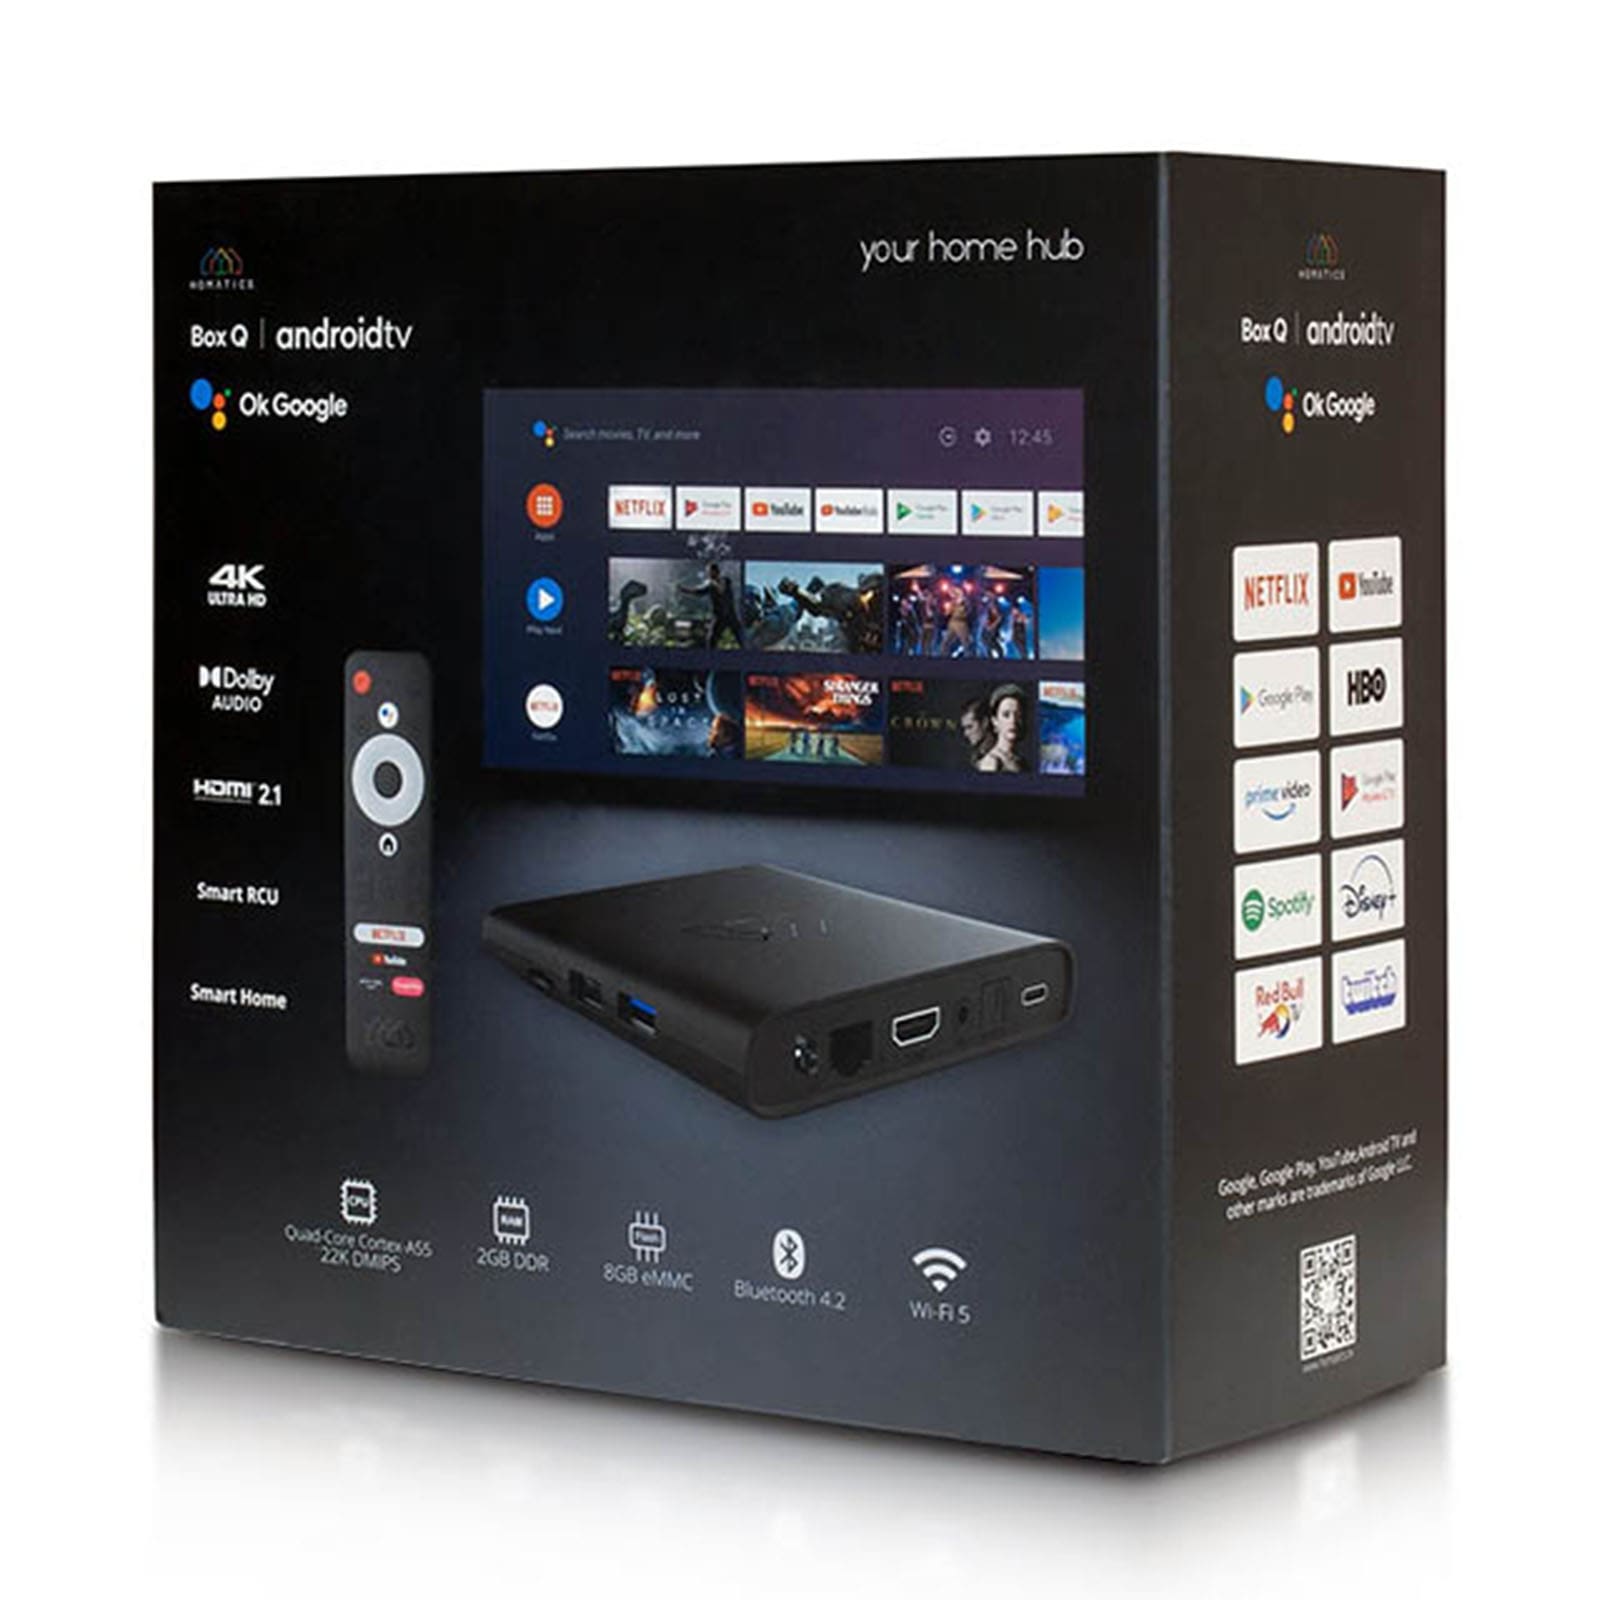 Homatics Box Q Android TV Mediaplayer (4K UHD, HDR, 5GHz WiFi, Bluetooth, Sprachfernbedienung)